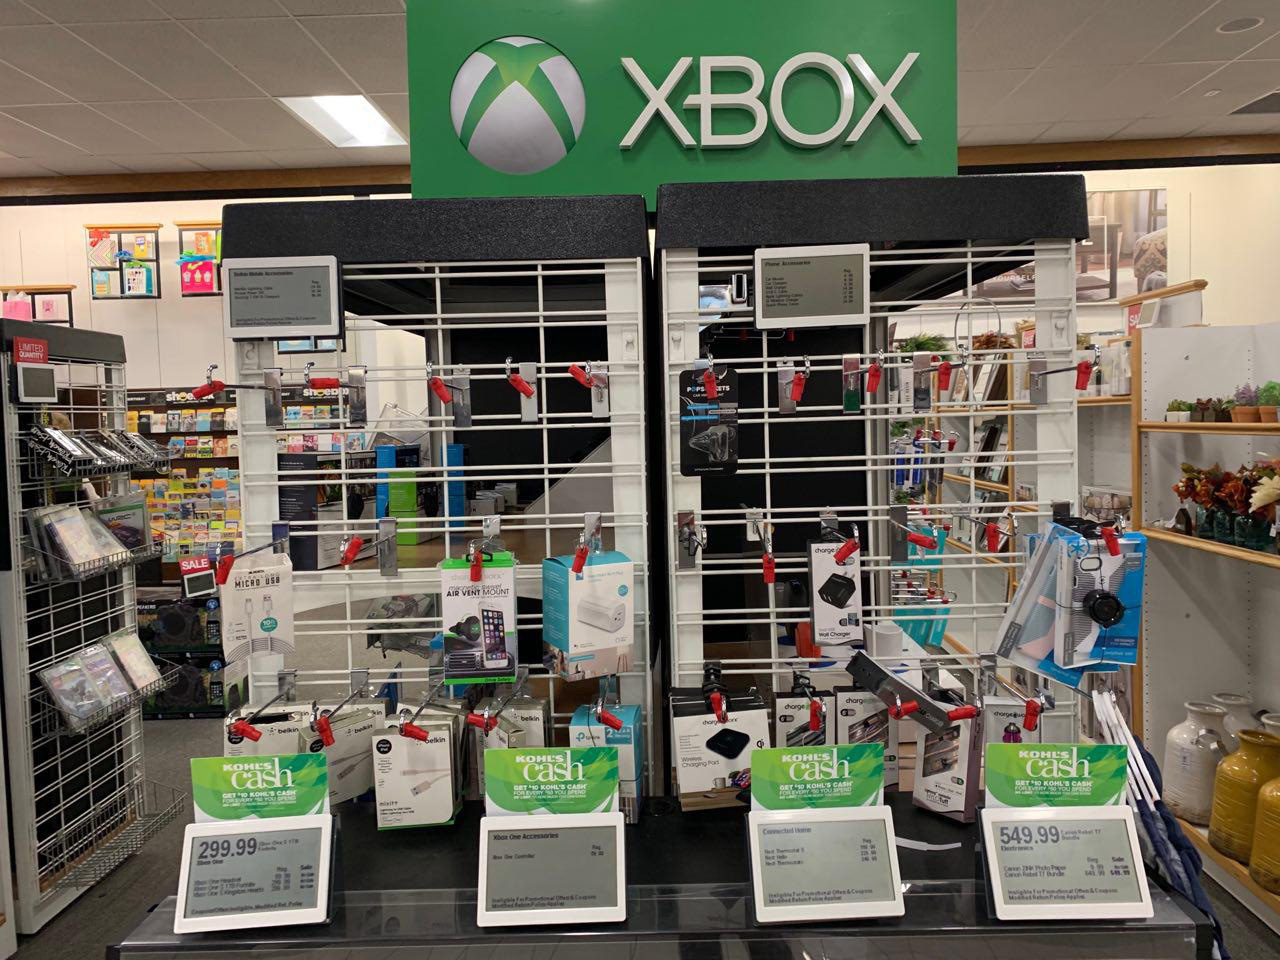 Kohls Xbox Offers